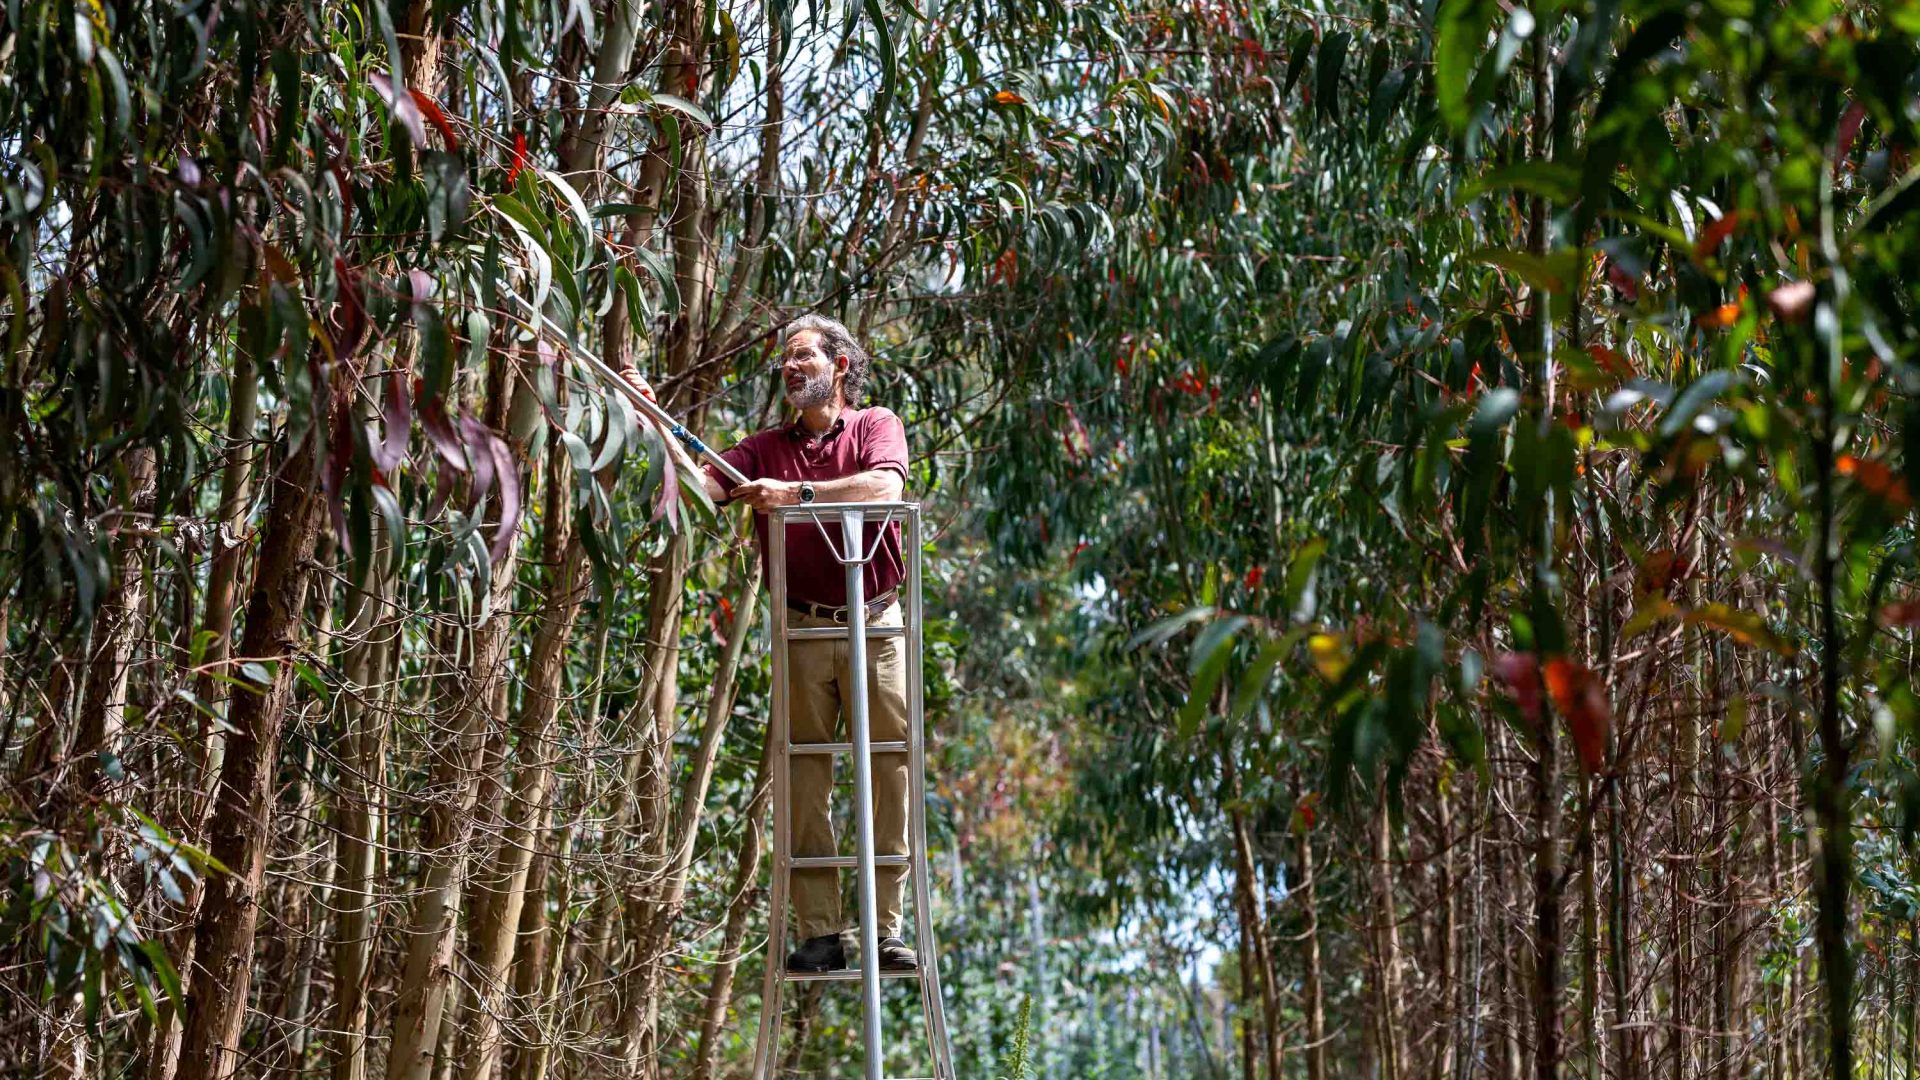 A man on a ladder picks eucalyptus leaves.